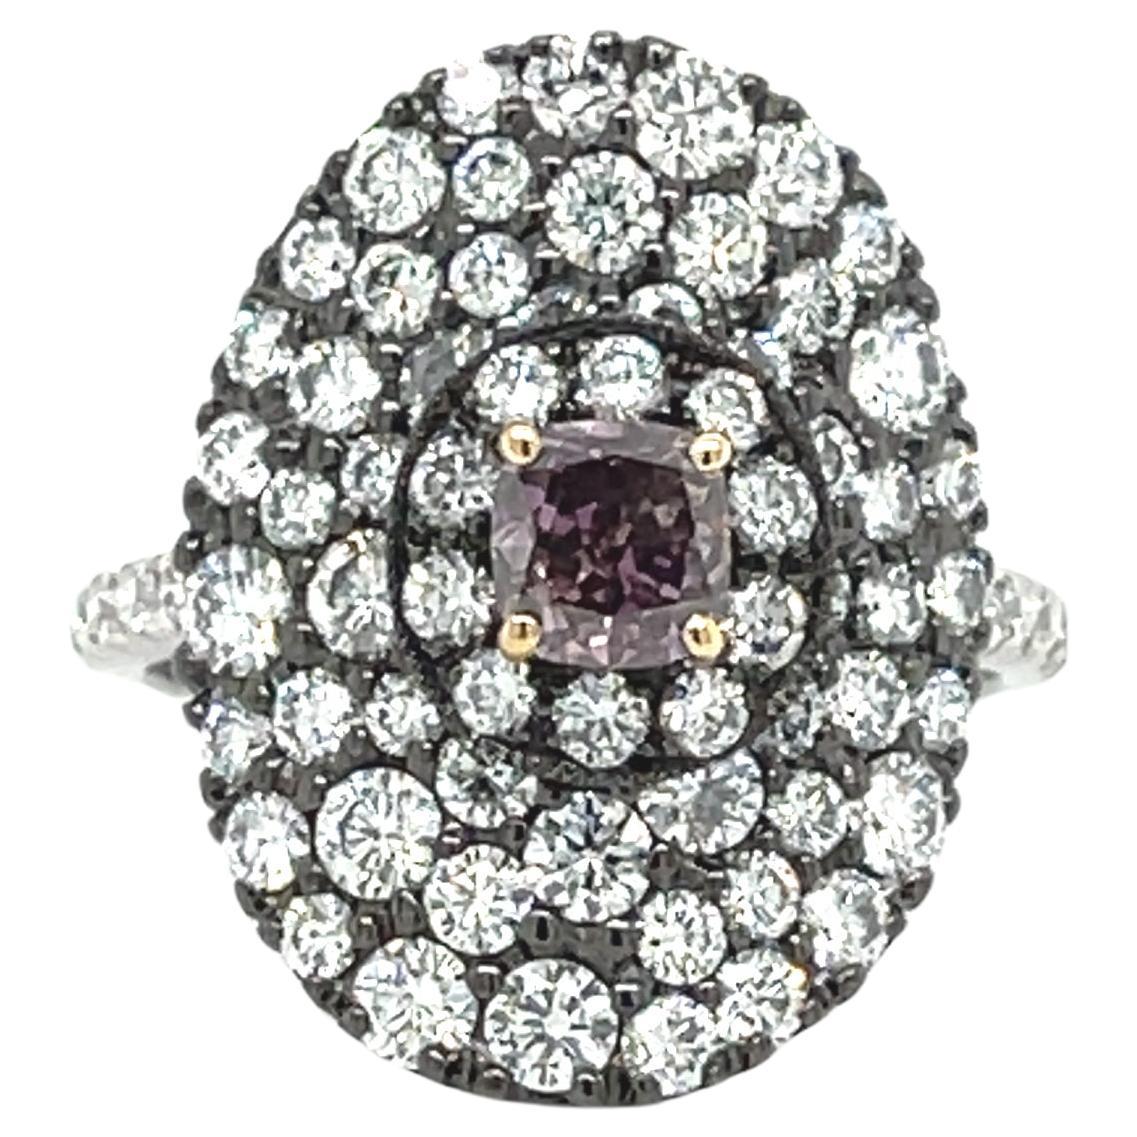 GIA Certified Purple-Pink Cushion Cut 0.50 Carat Diamond Ring in 18K Gold